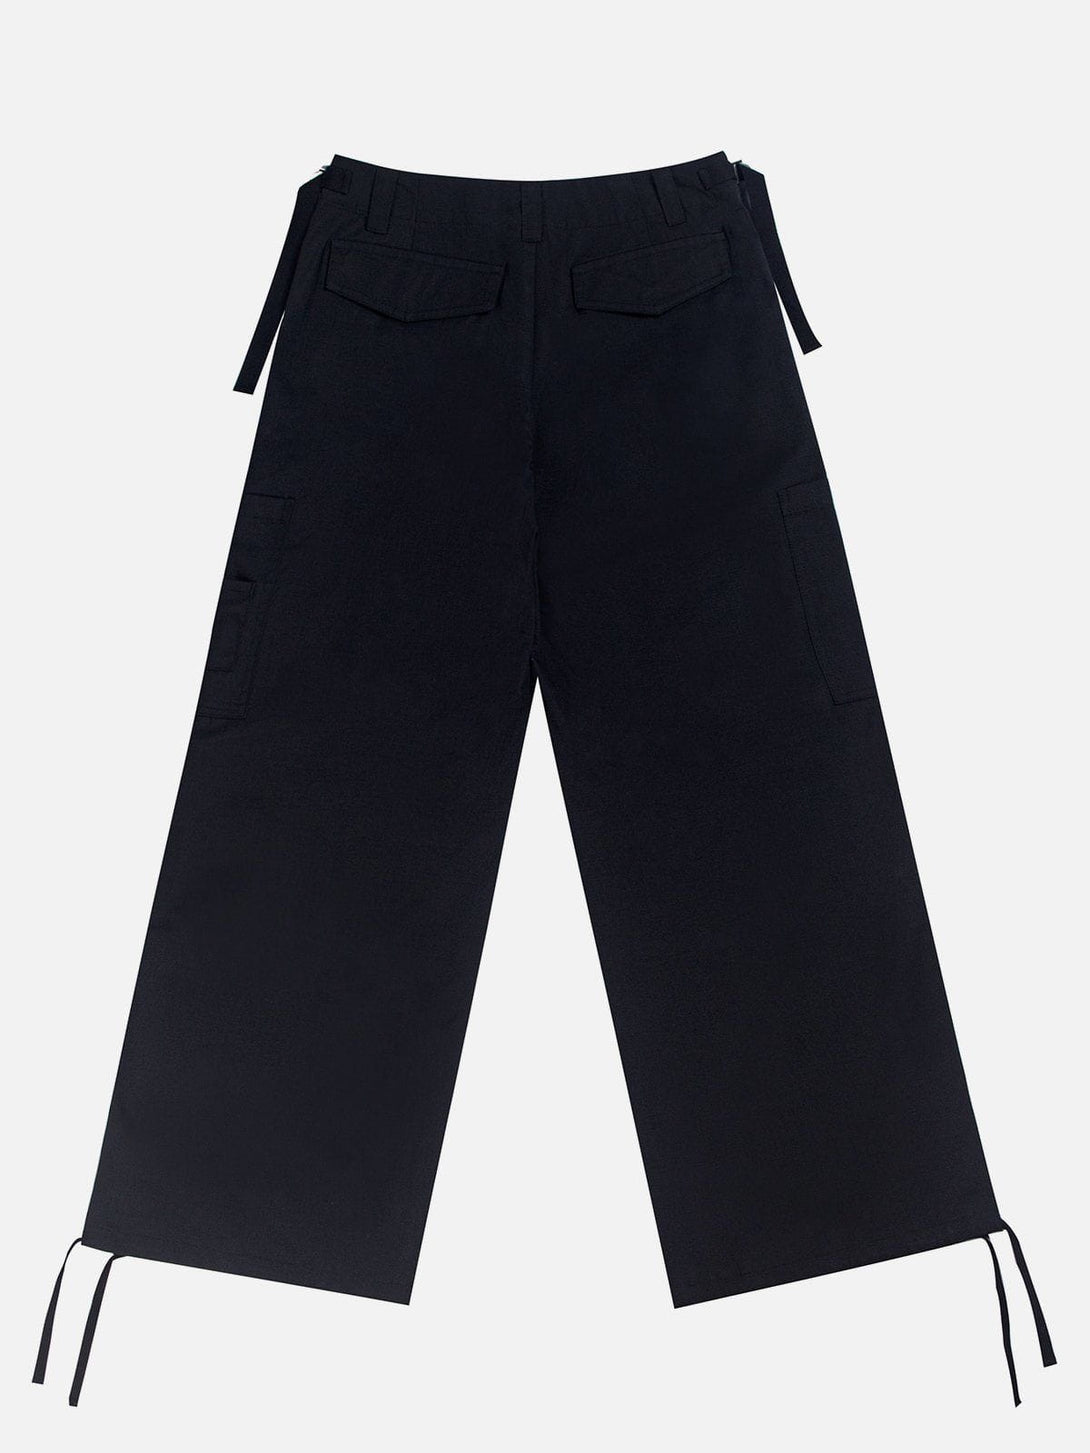 Majesda® - Multi-rope Cargo Pants outfit ideas streetwear fashion